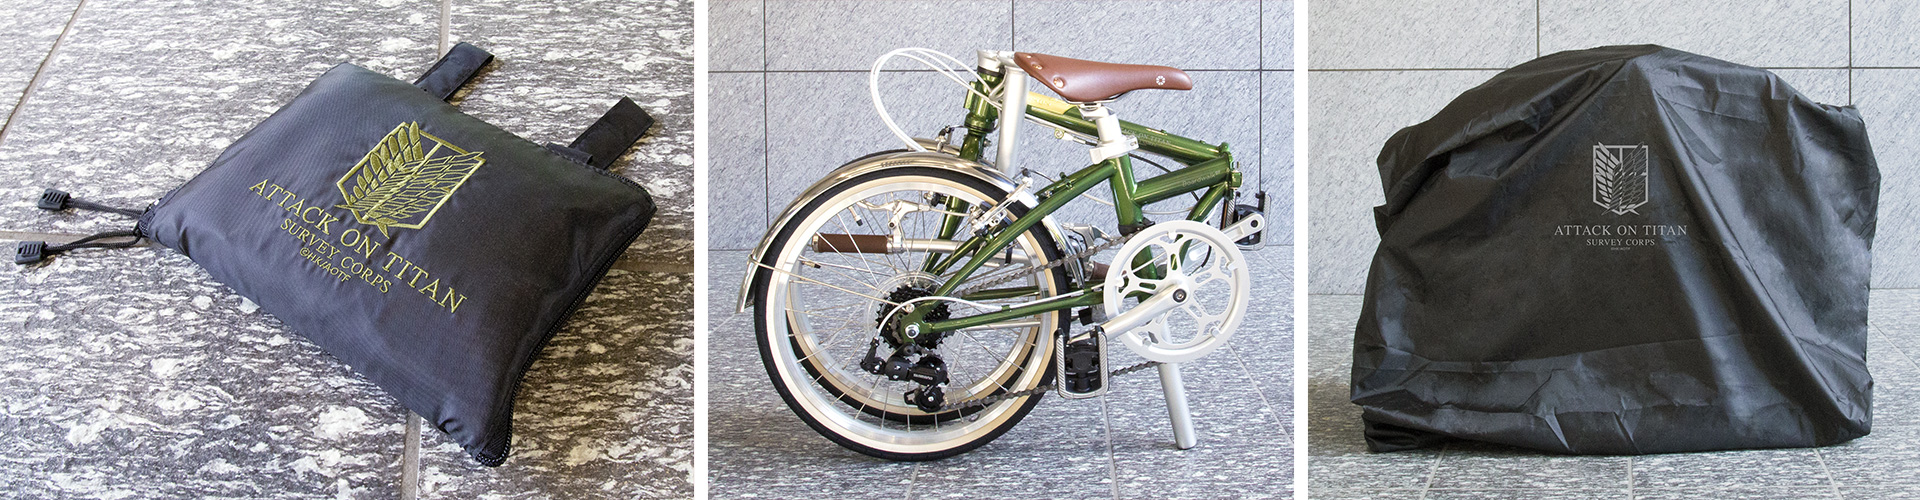 Ryokotomo - 1655768126 276 f680713a attack on titan inspires collaboration folding bike from dahon